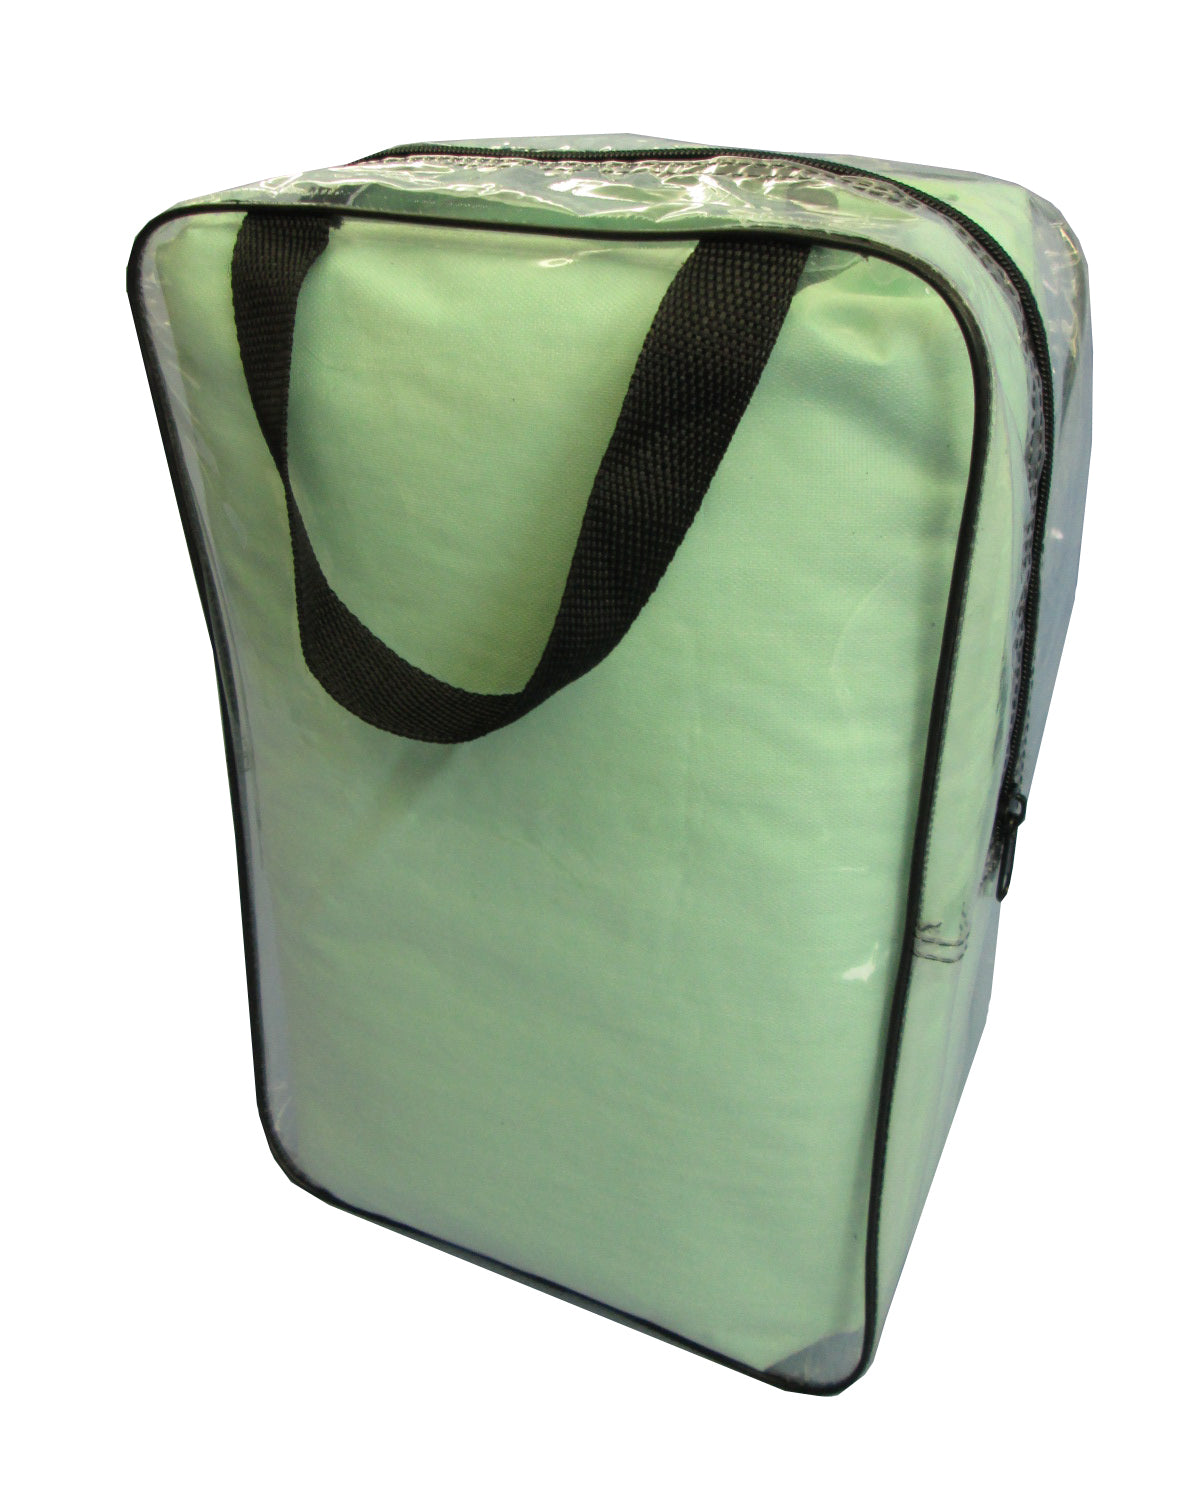 JLSB-0038 Sewn Bag